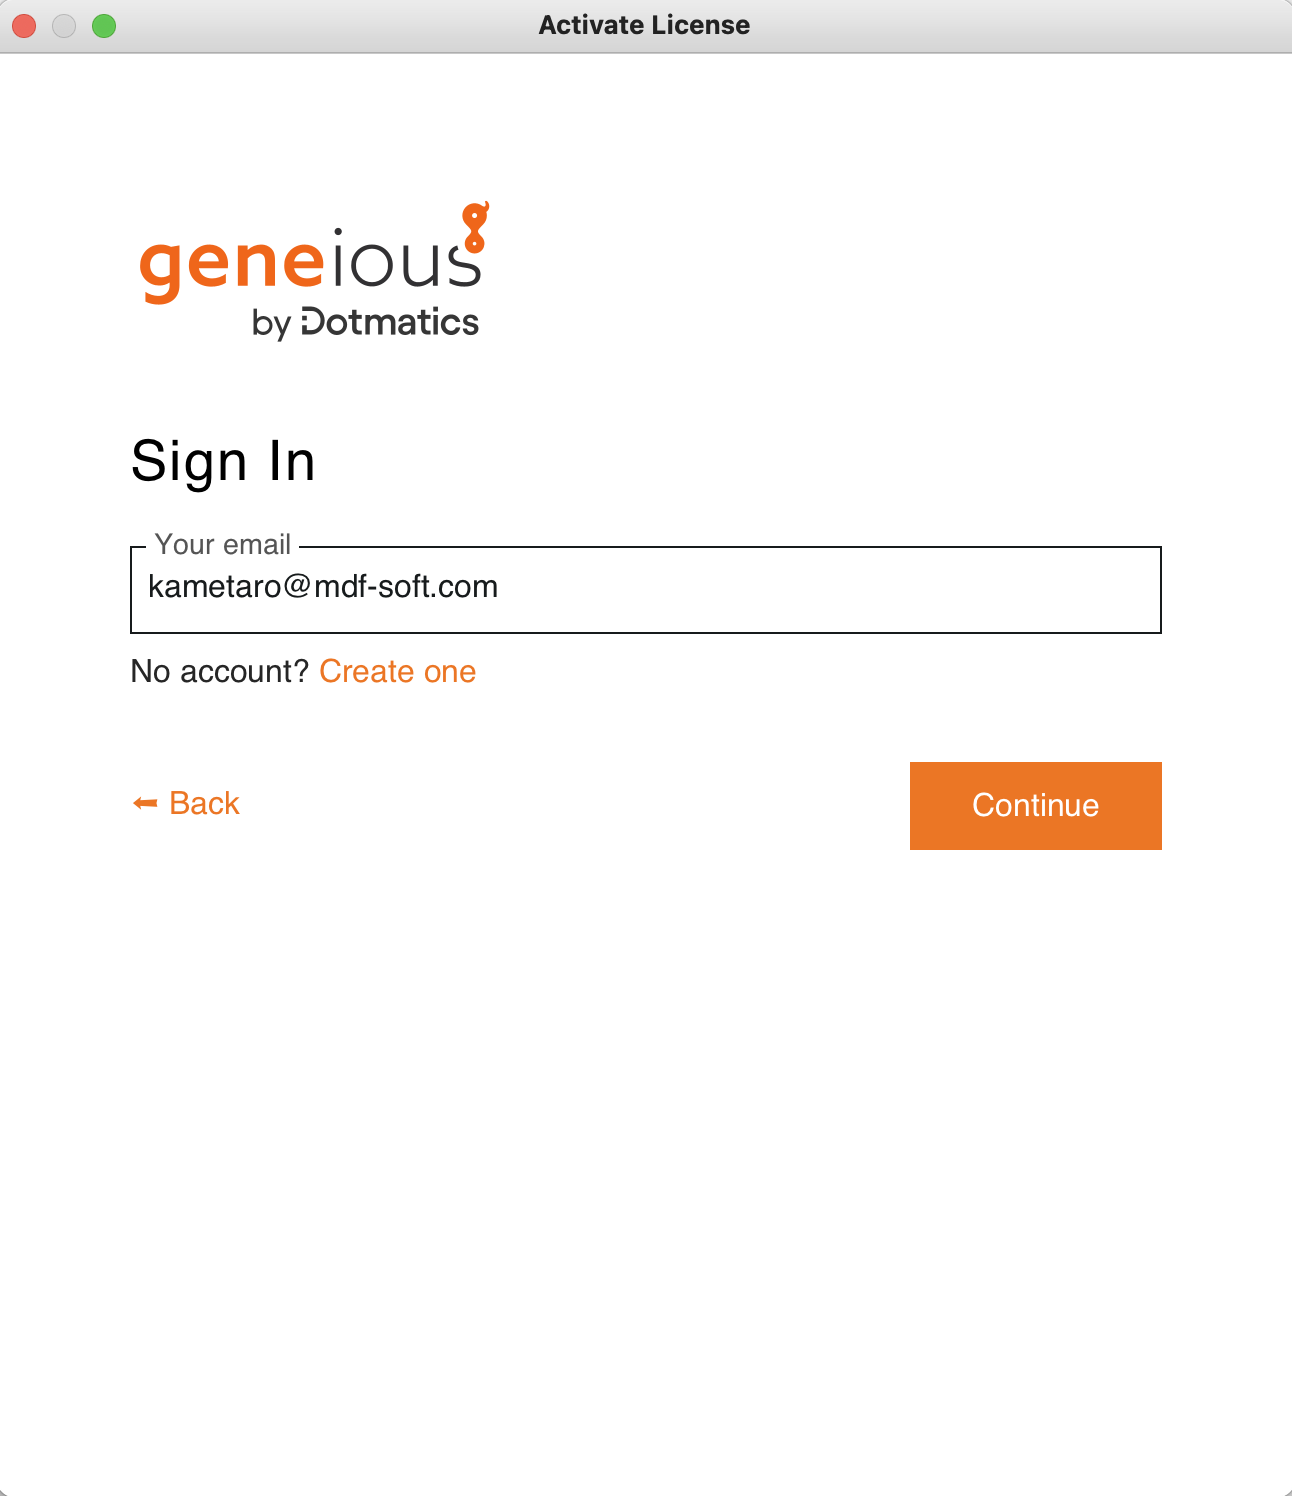 Geneious_Choose an Activation Methodダイアログ